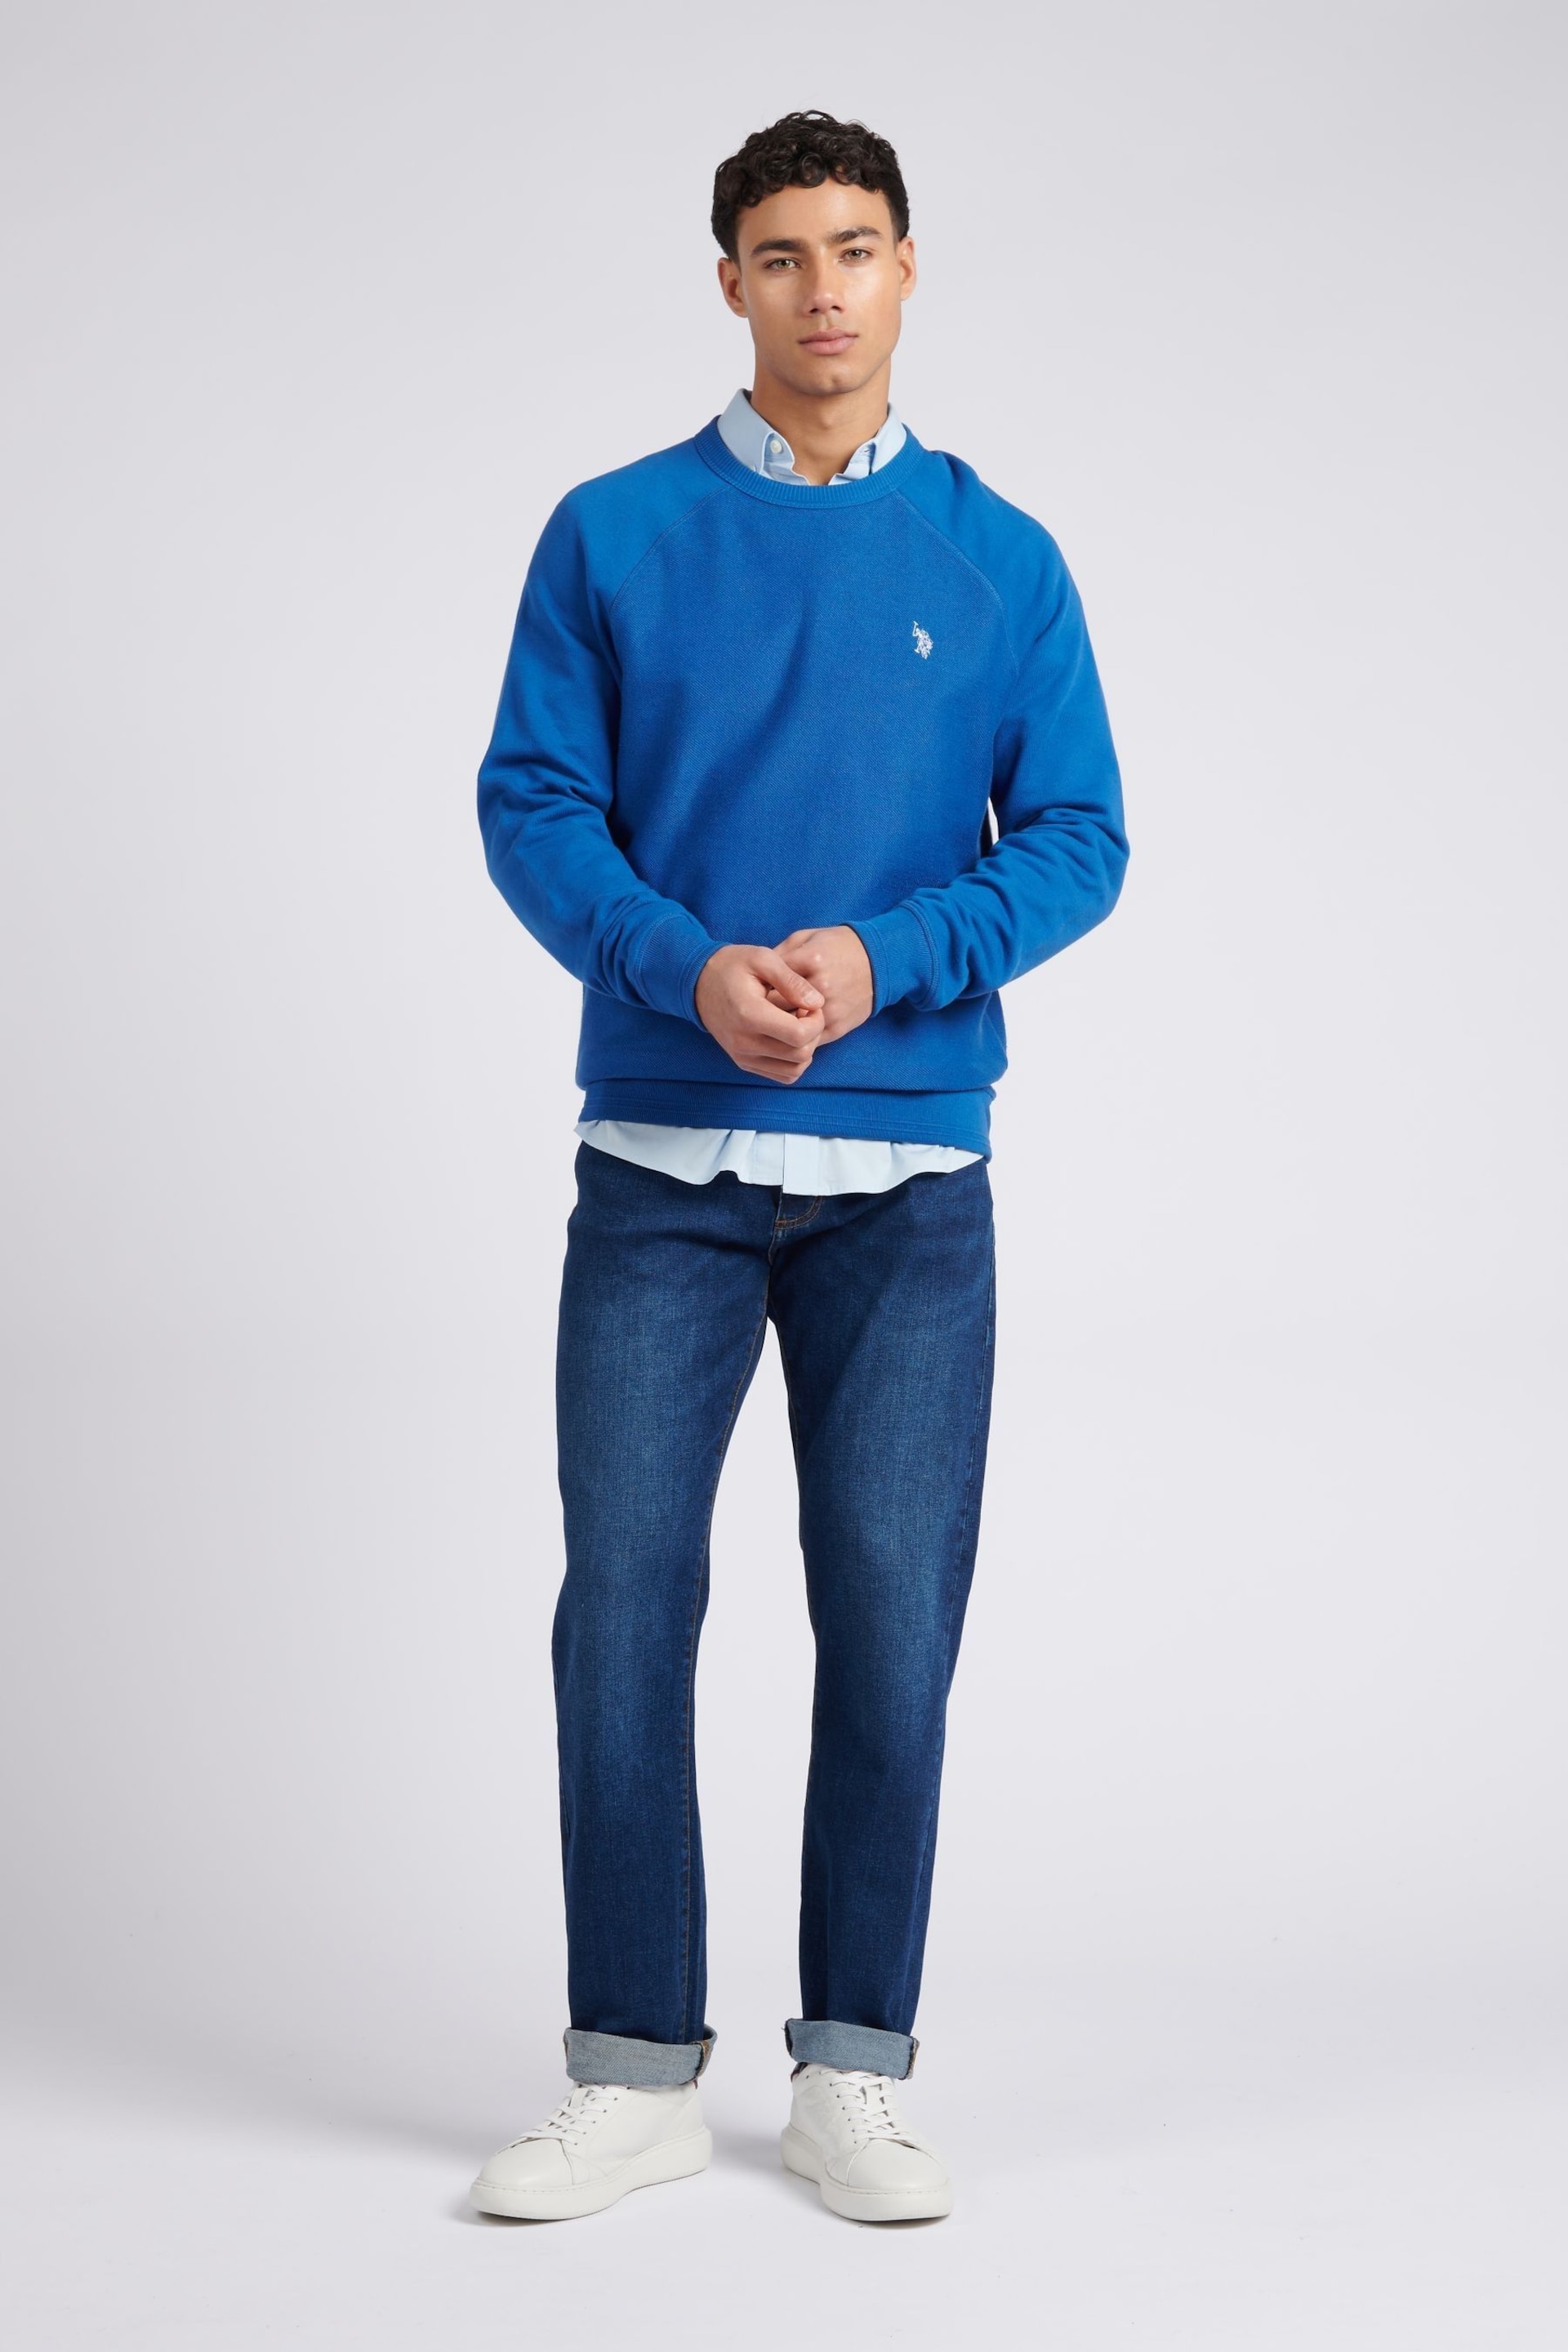 U.S. Polo Assn. Mens Blue Classic Fit Texture Reverse Sweatshirt - Image 3 of 3